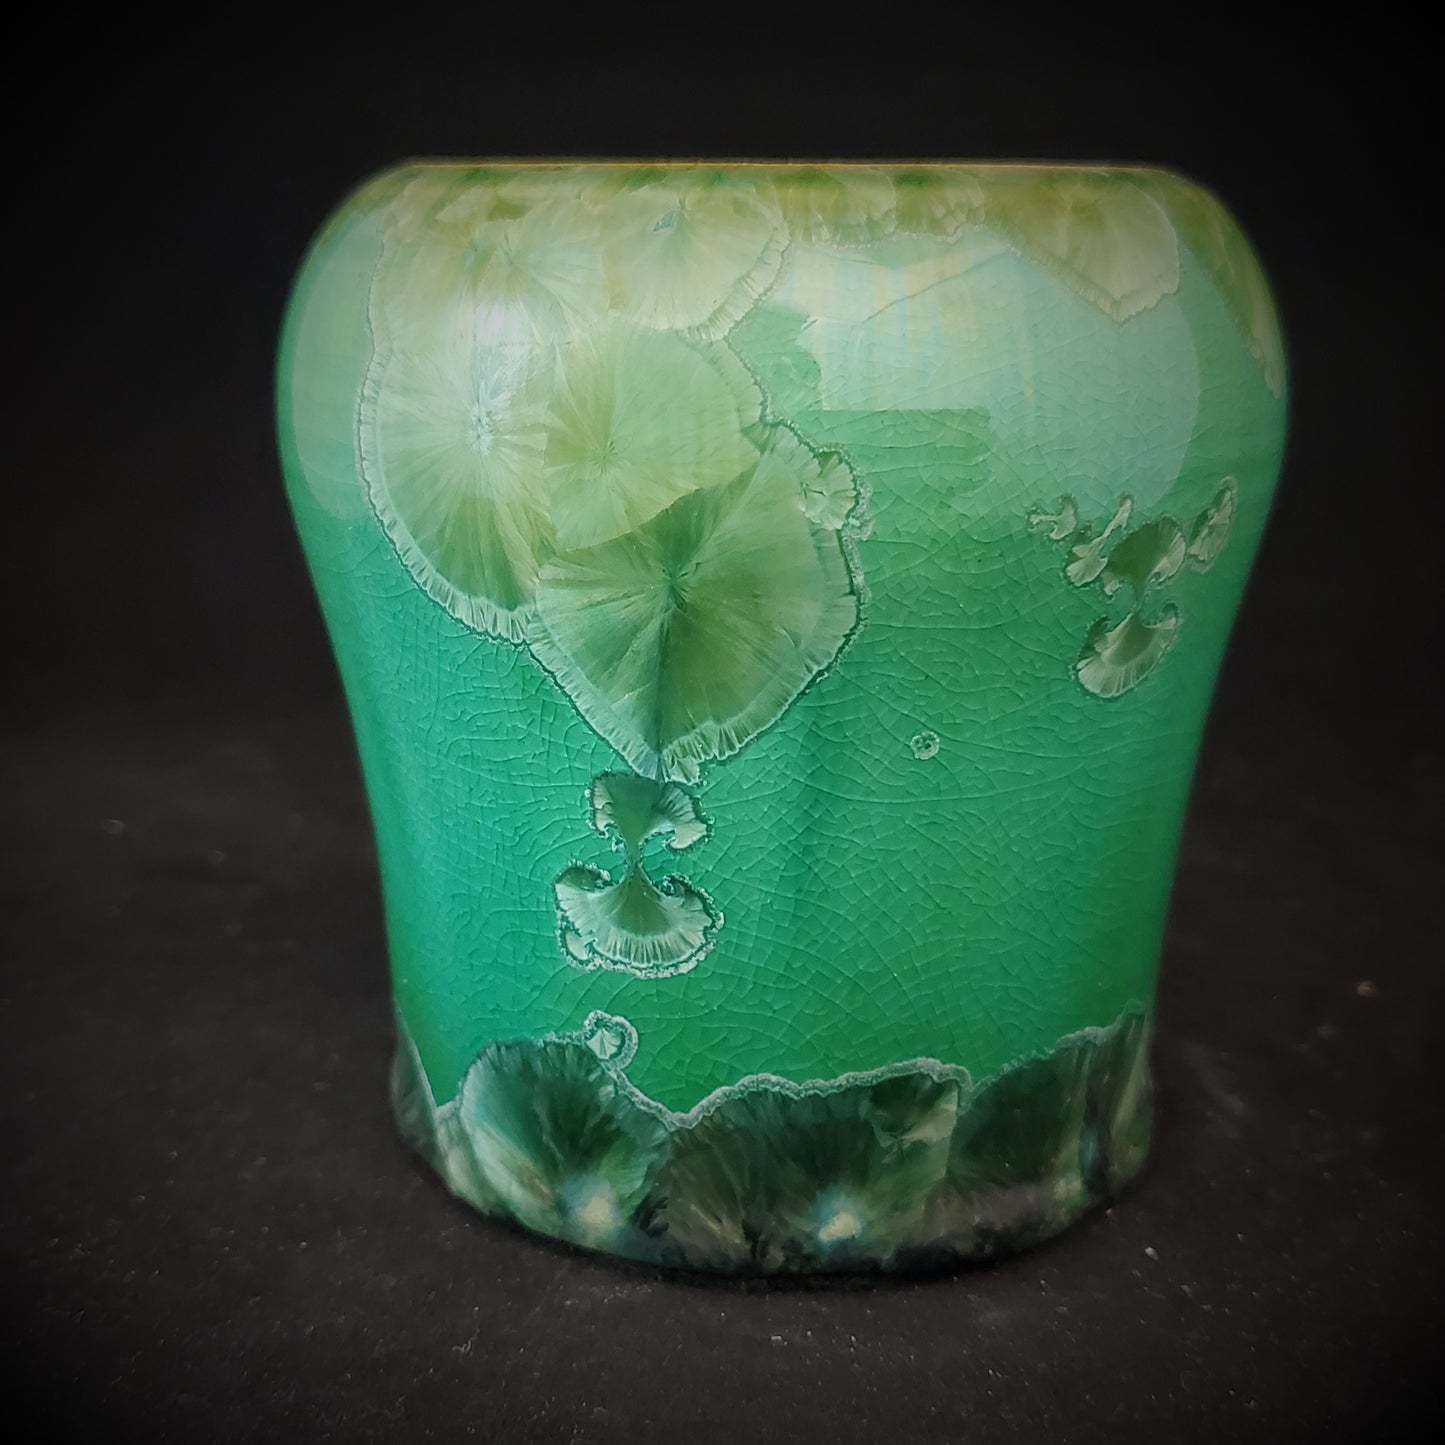 Crystalline Vase - 4"t x 3.75"w